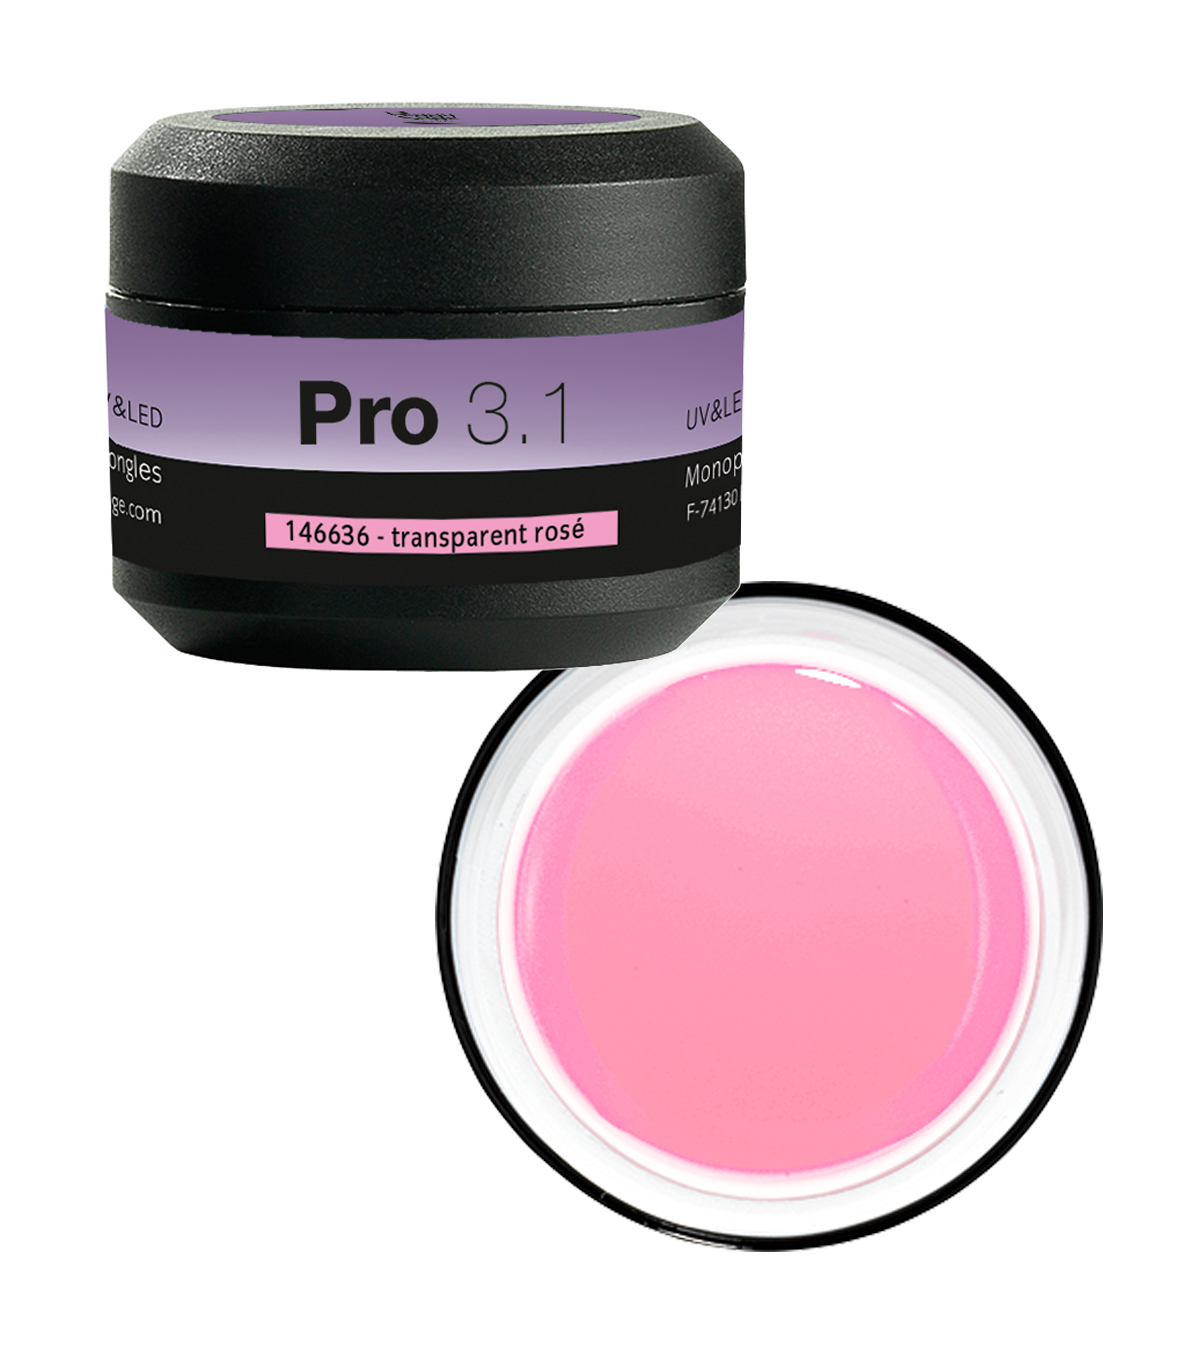 PS Pro 3.1 UV-Gel transparent rosé 15g